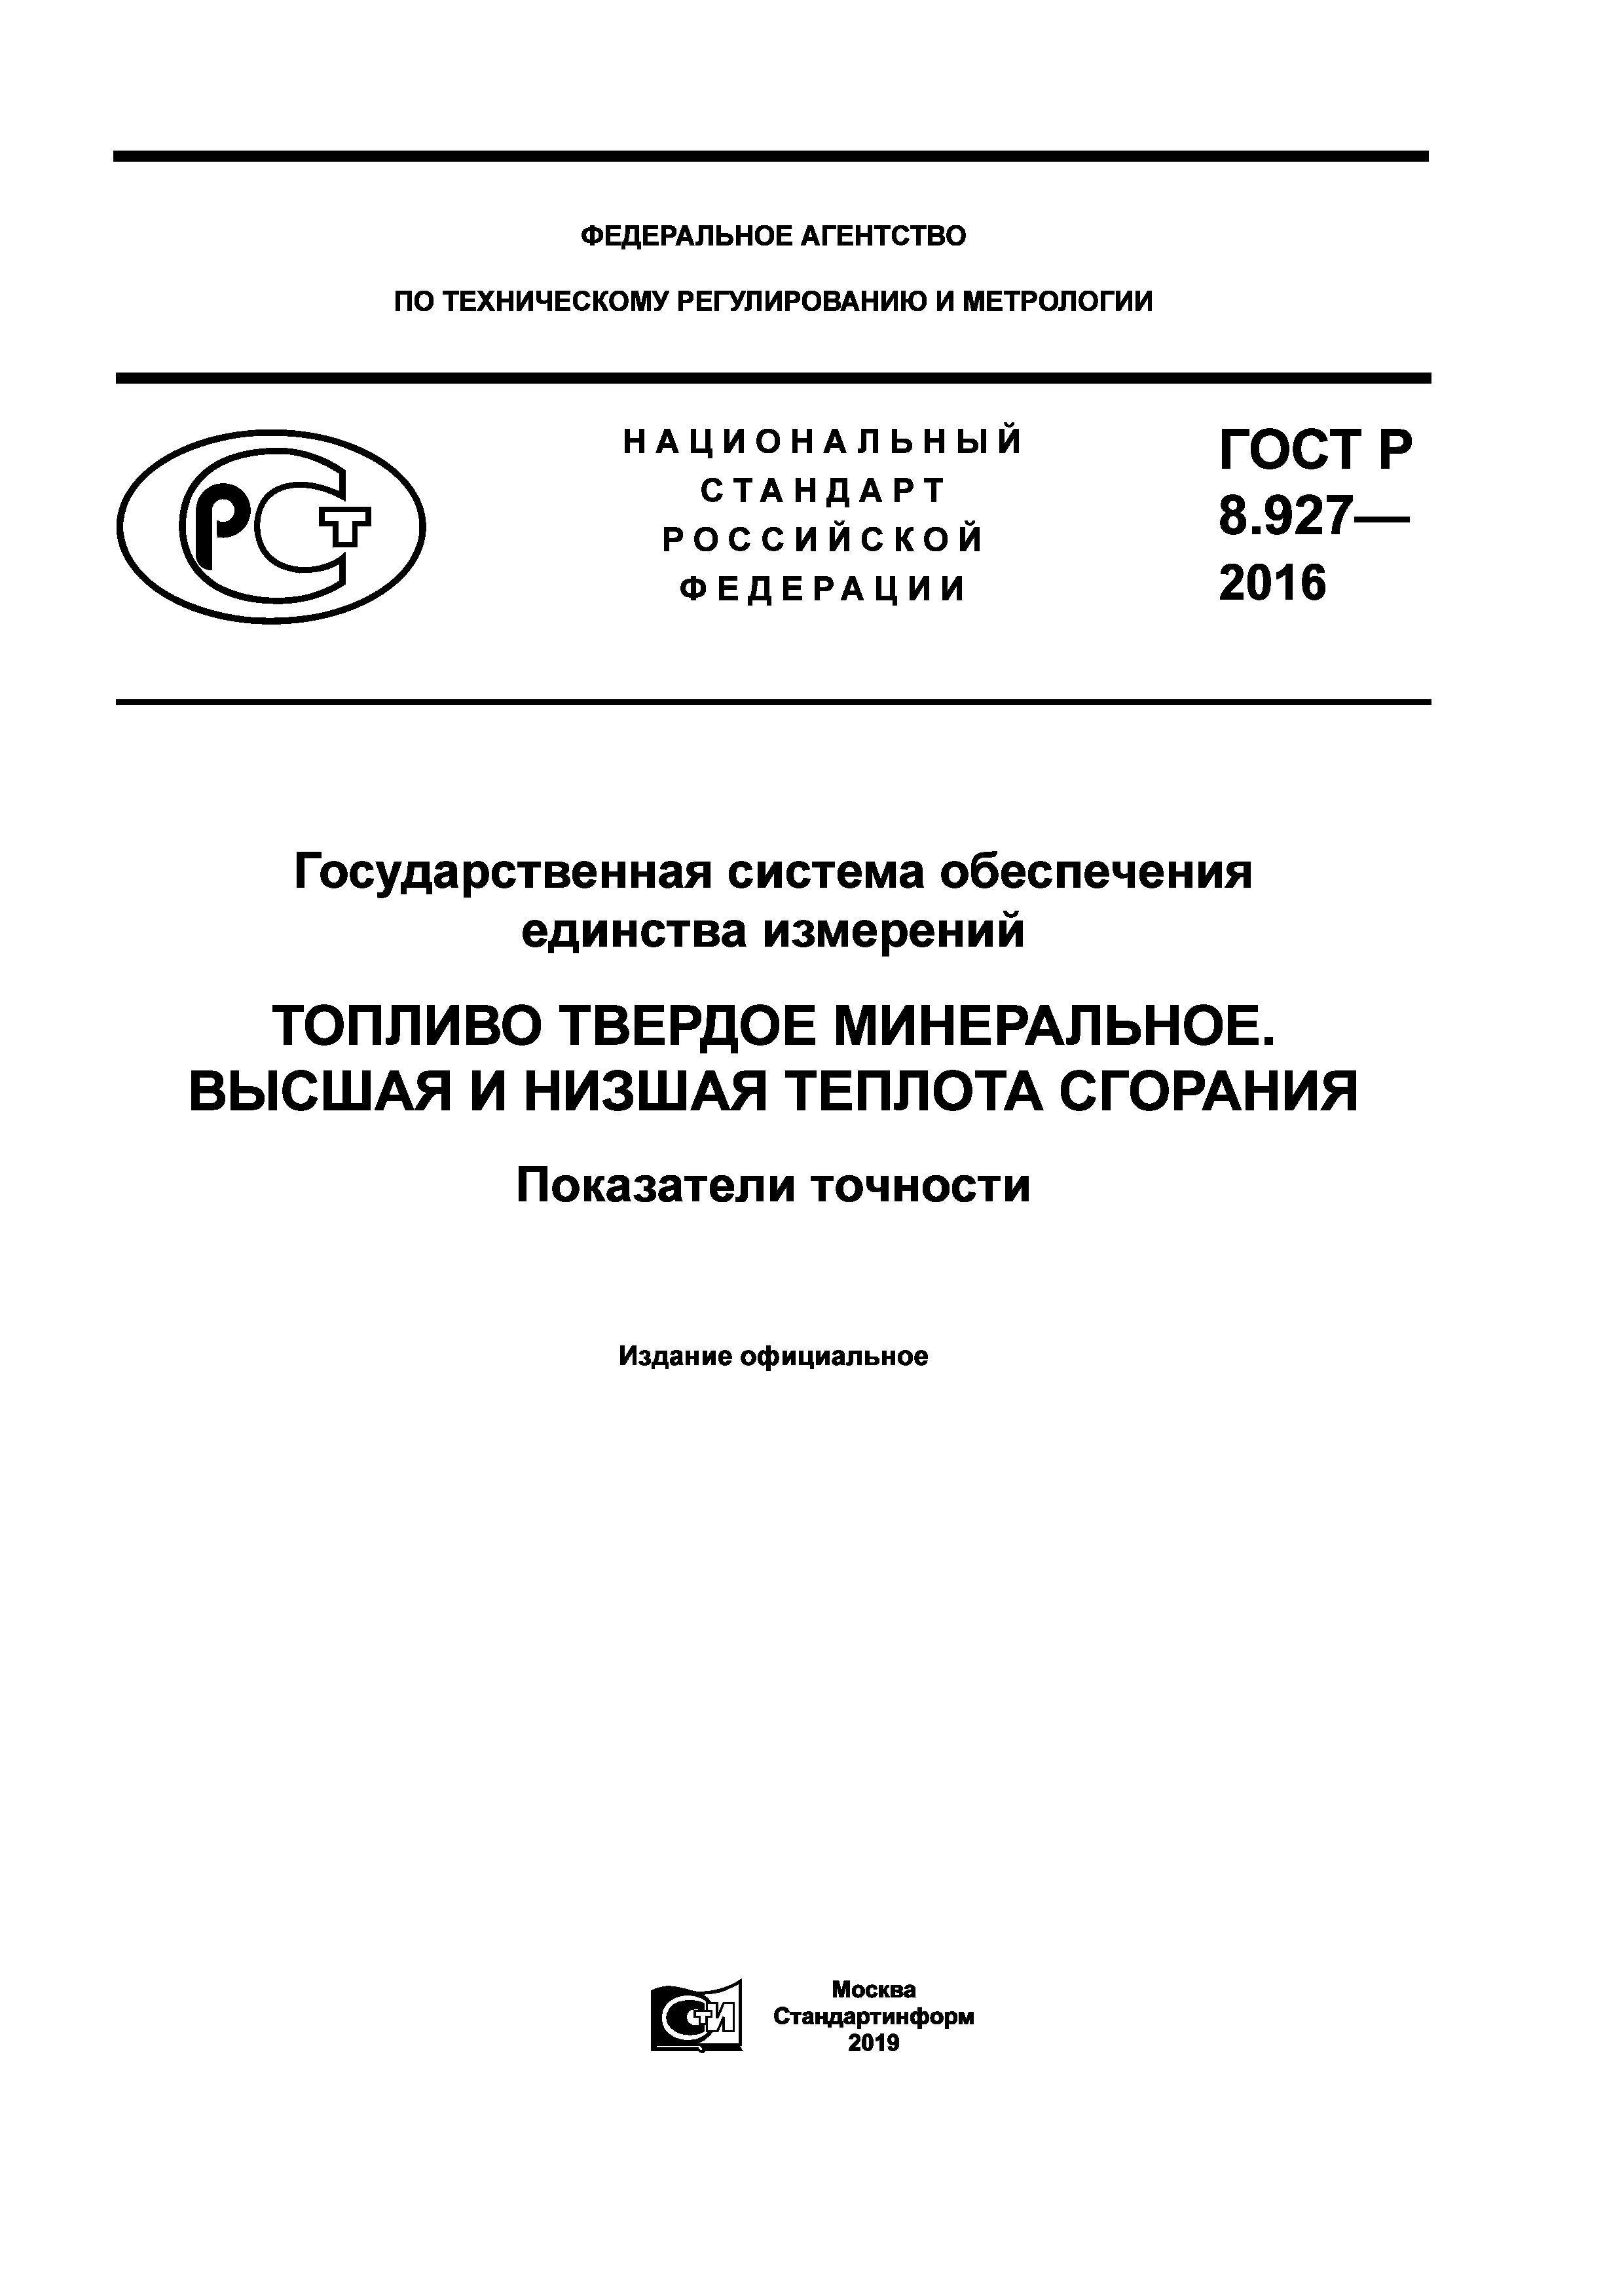 ГОСТ Р 8.927-2016